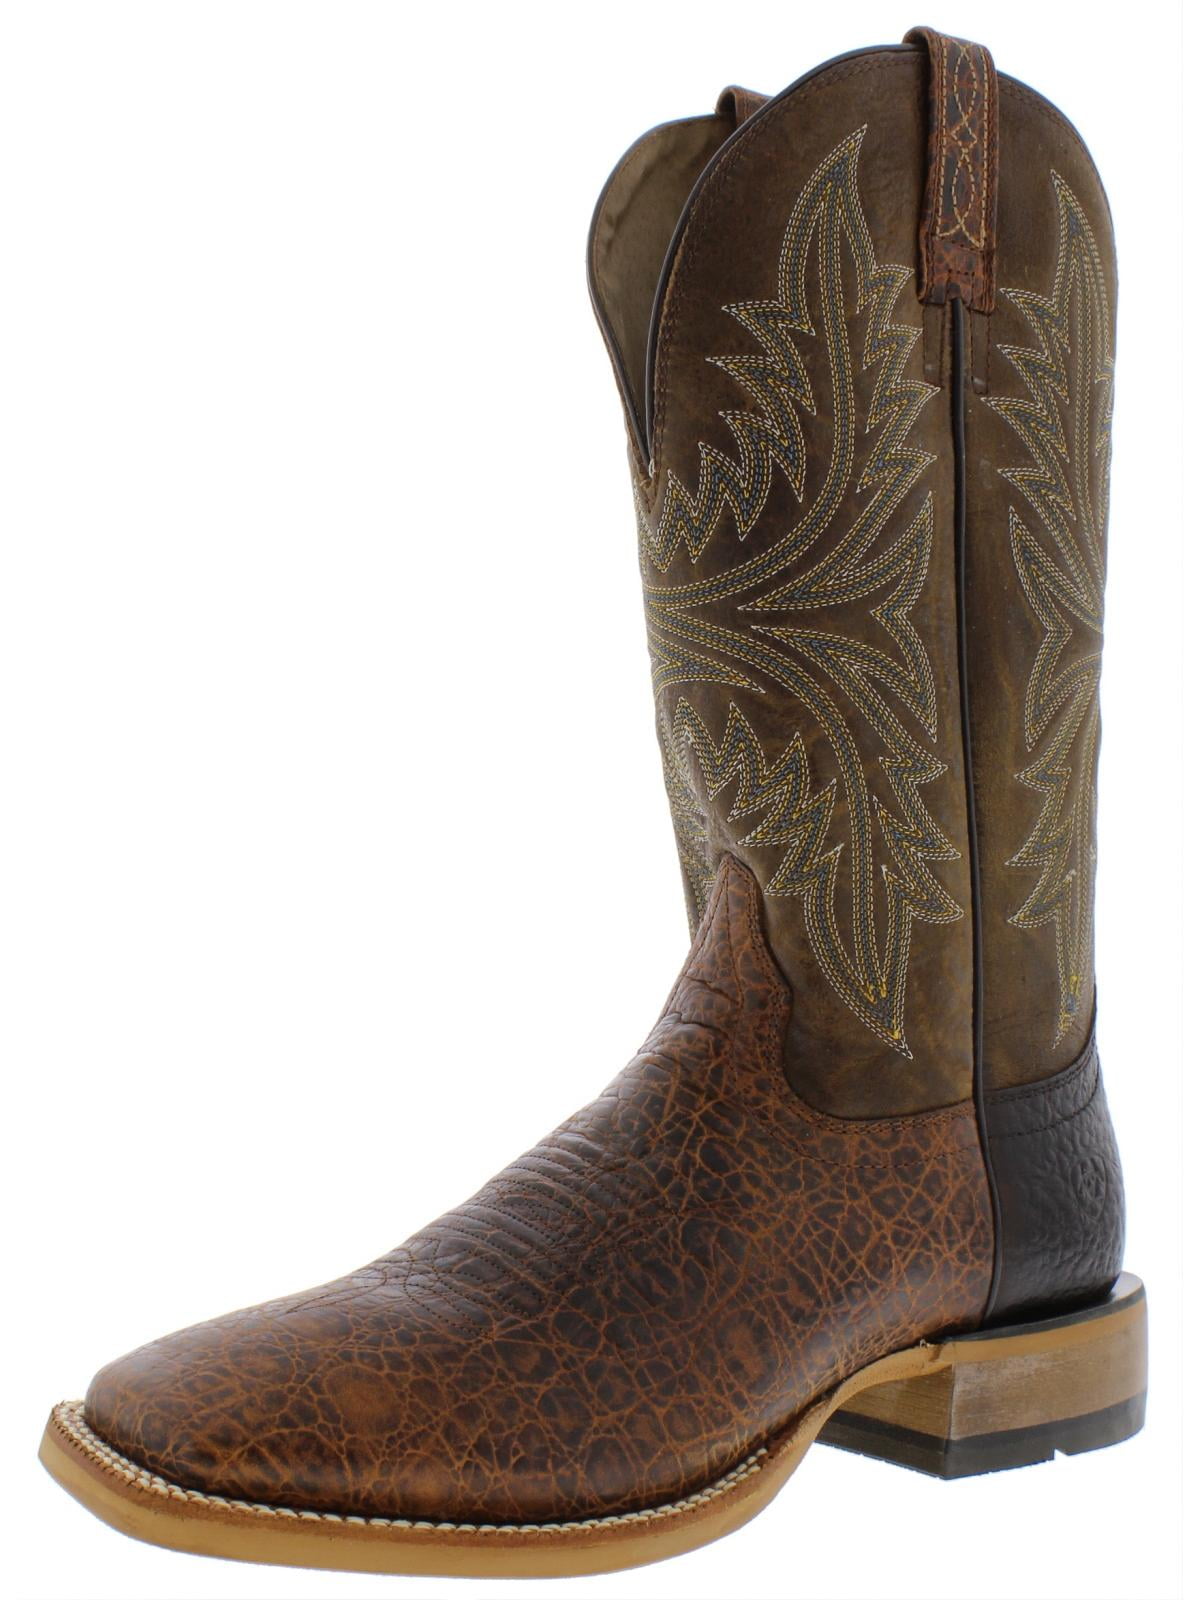 ariat tall cowboy boots